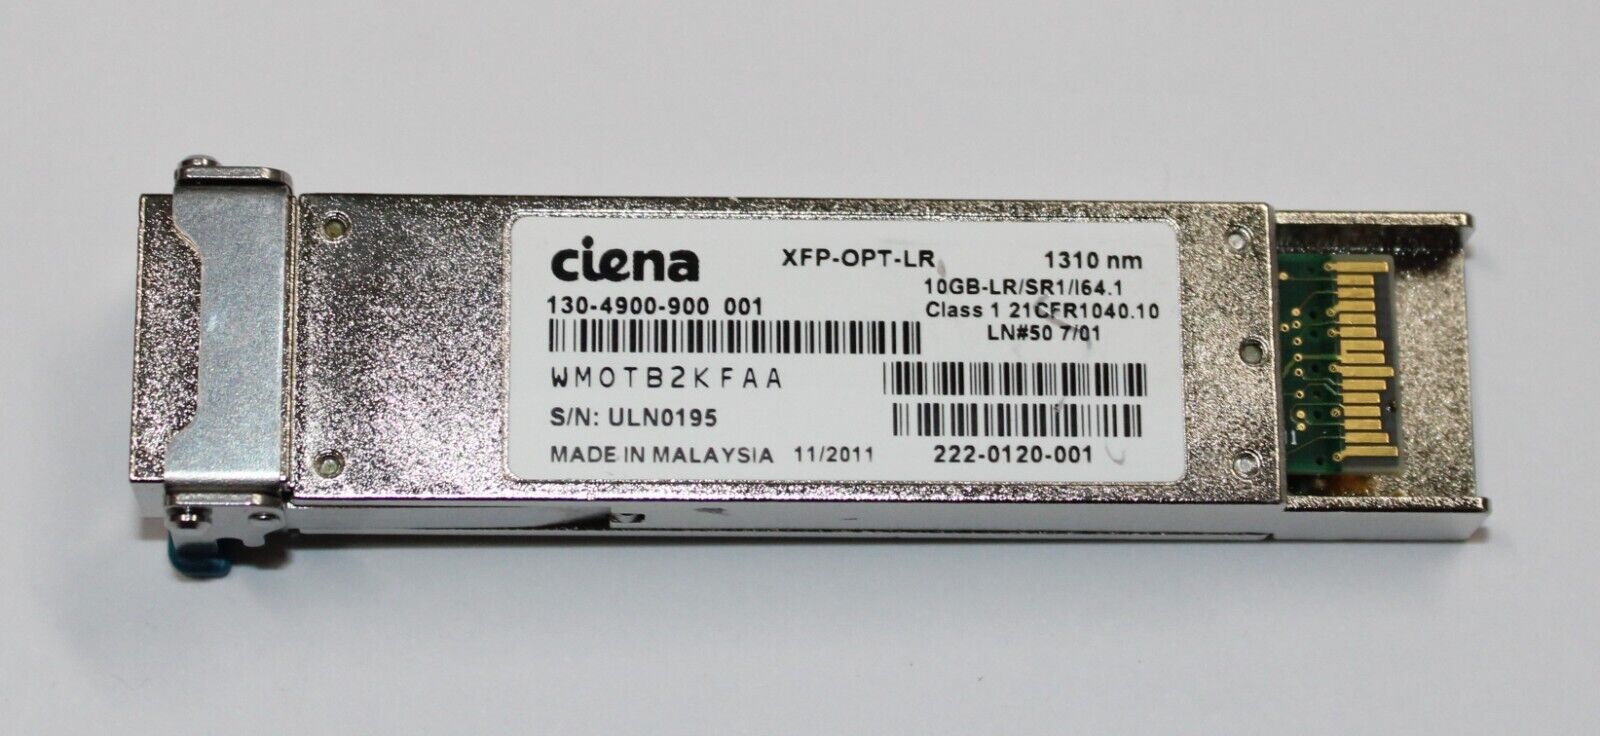 Ciena | 130-4900-900 001 | XFP-OPT-LR 10GB-LR/SR/I64.1 Transceiver Module